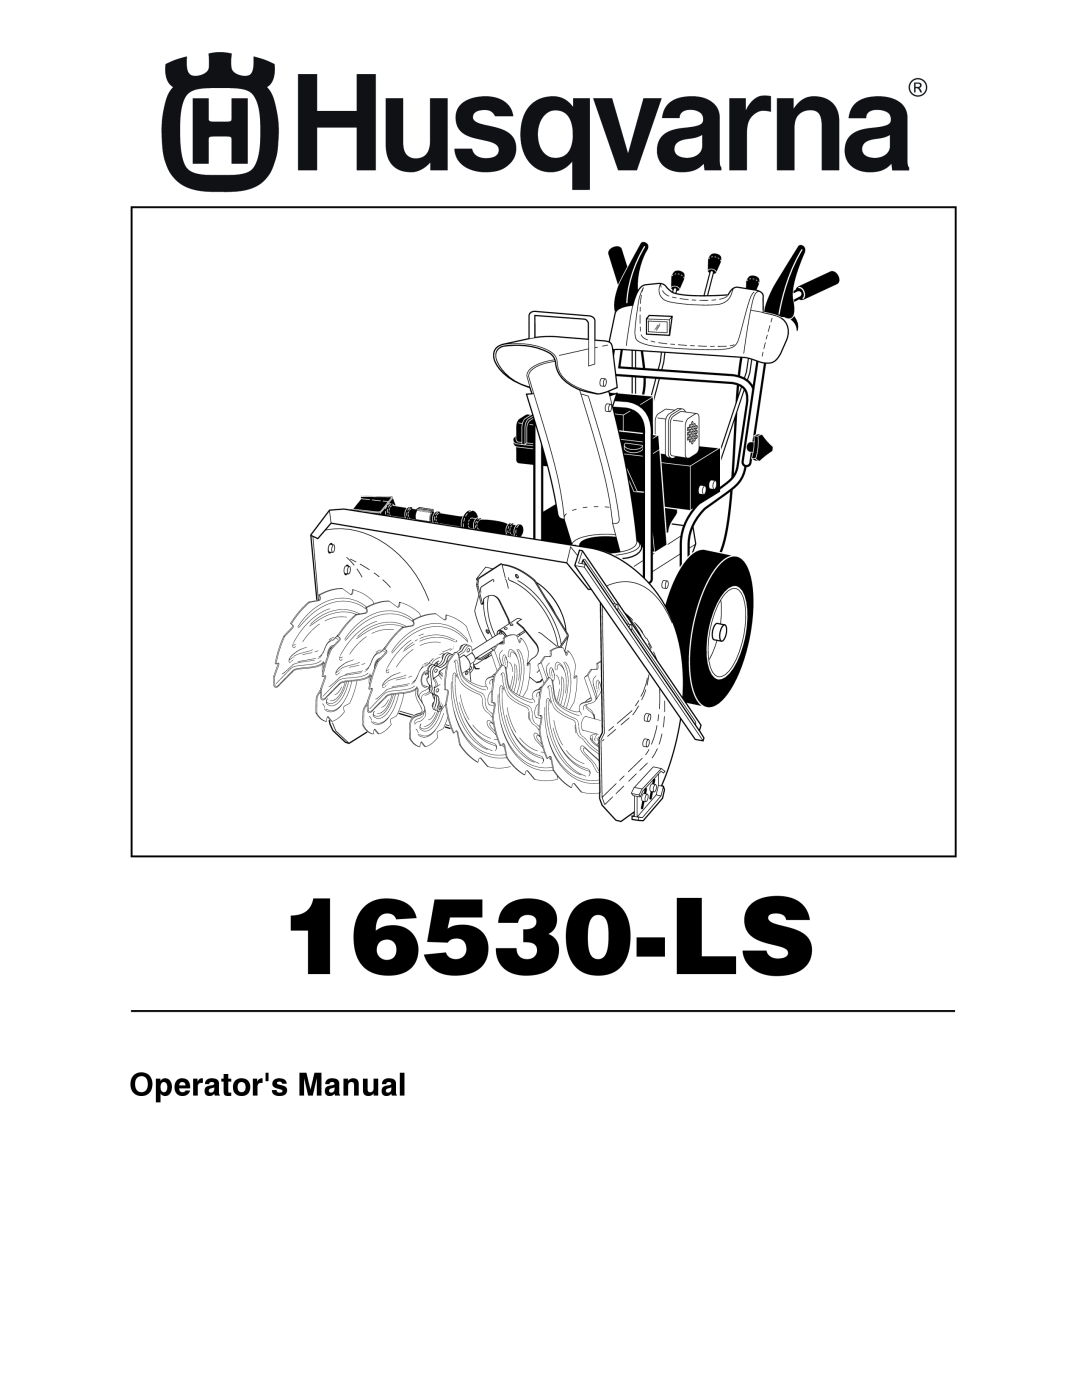 Husqvarna 16530-LS manual Operators Manual 